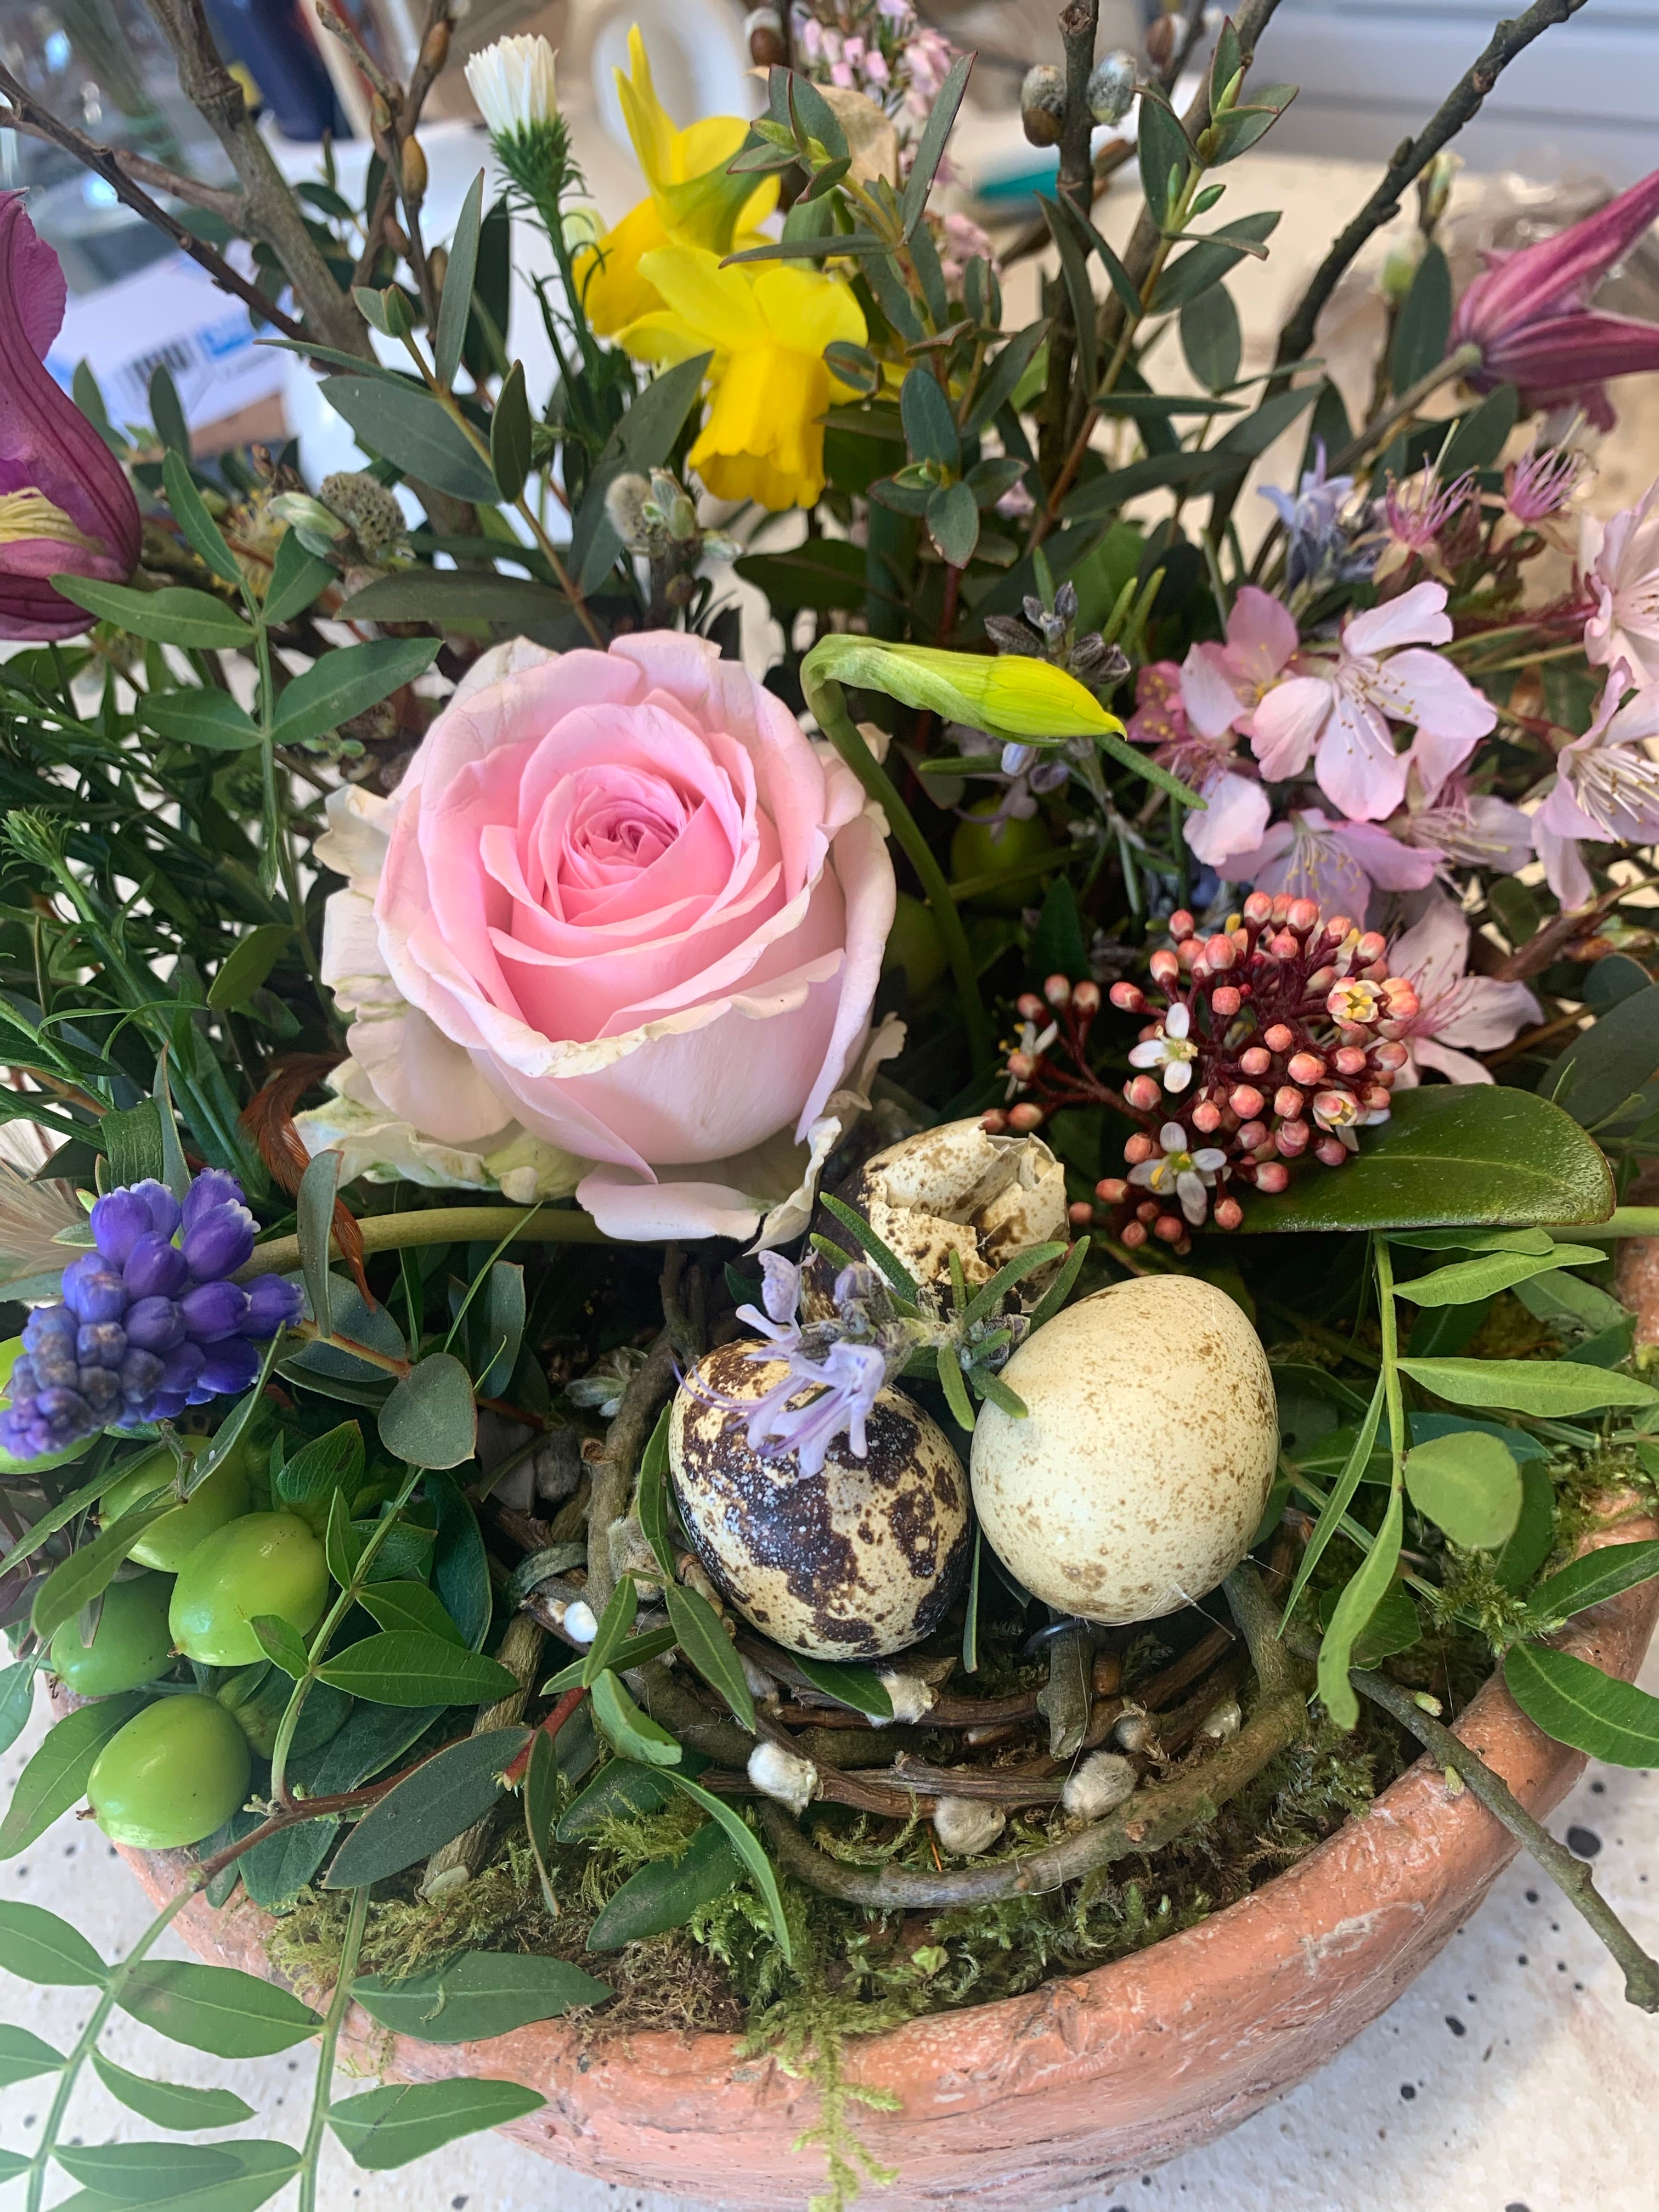 Easter arrangement